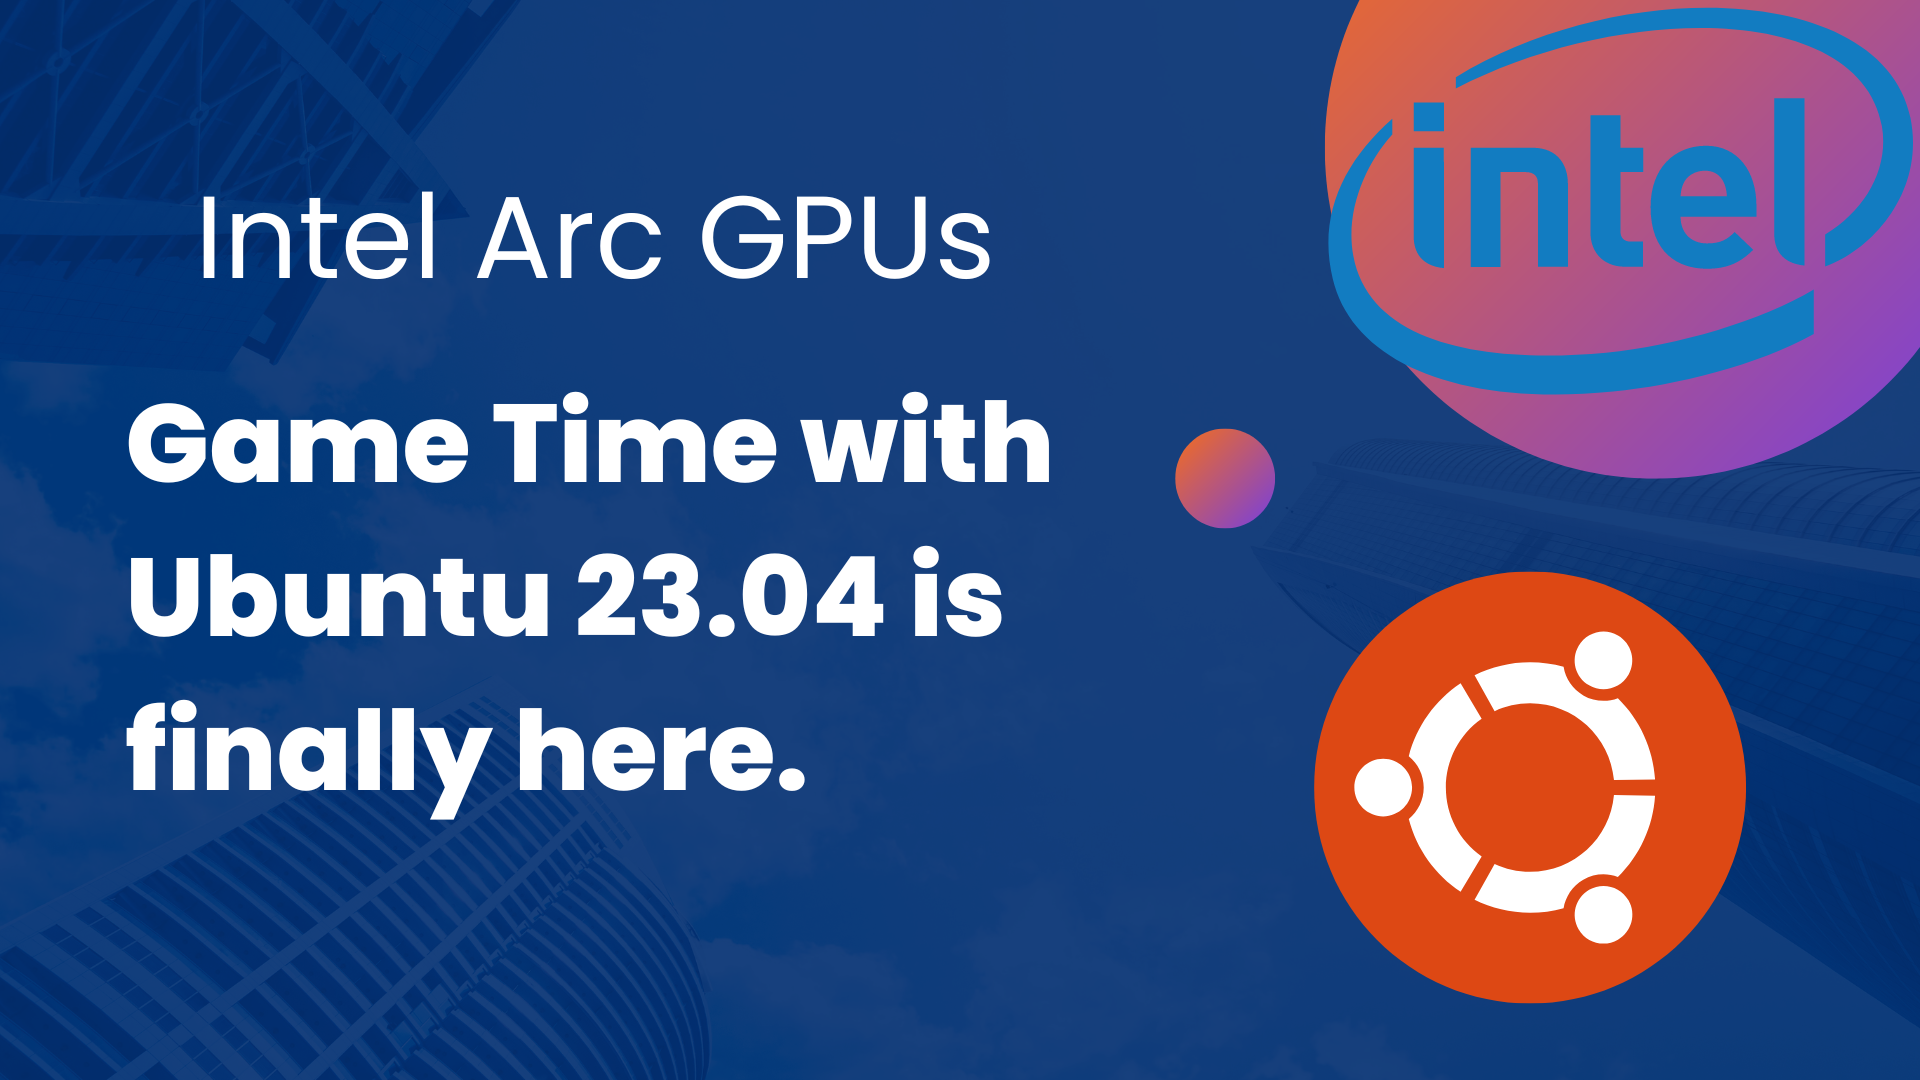 Intel Arc GPUs Working Out-of-the-Box on Ubuntu 23.04